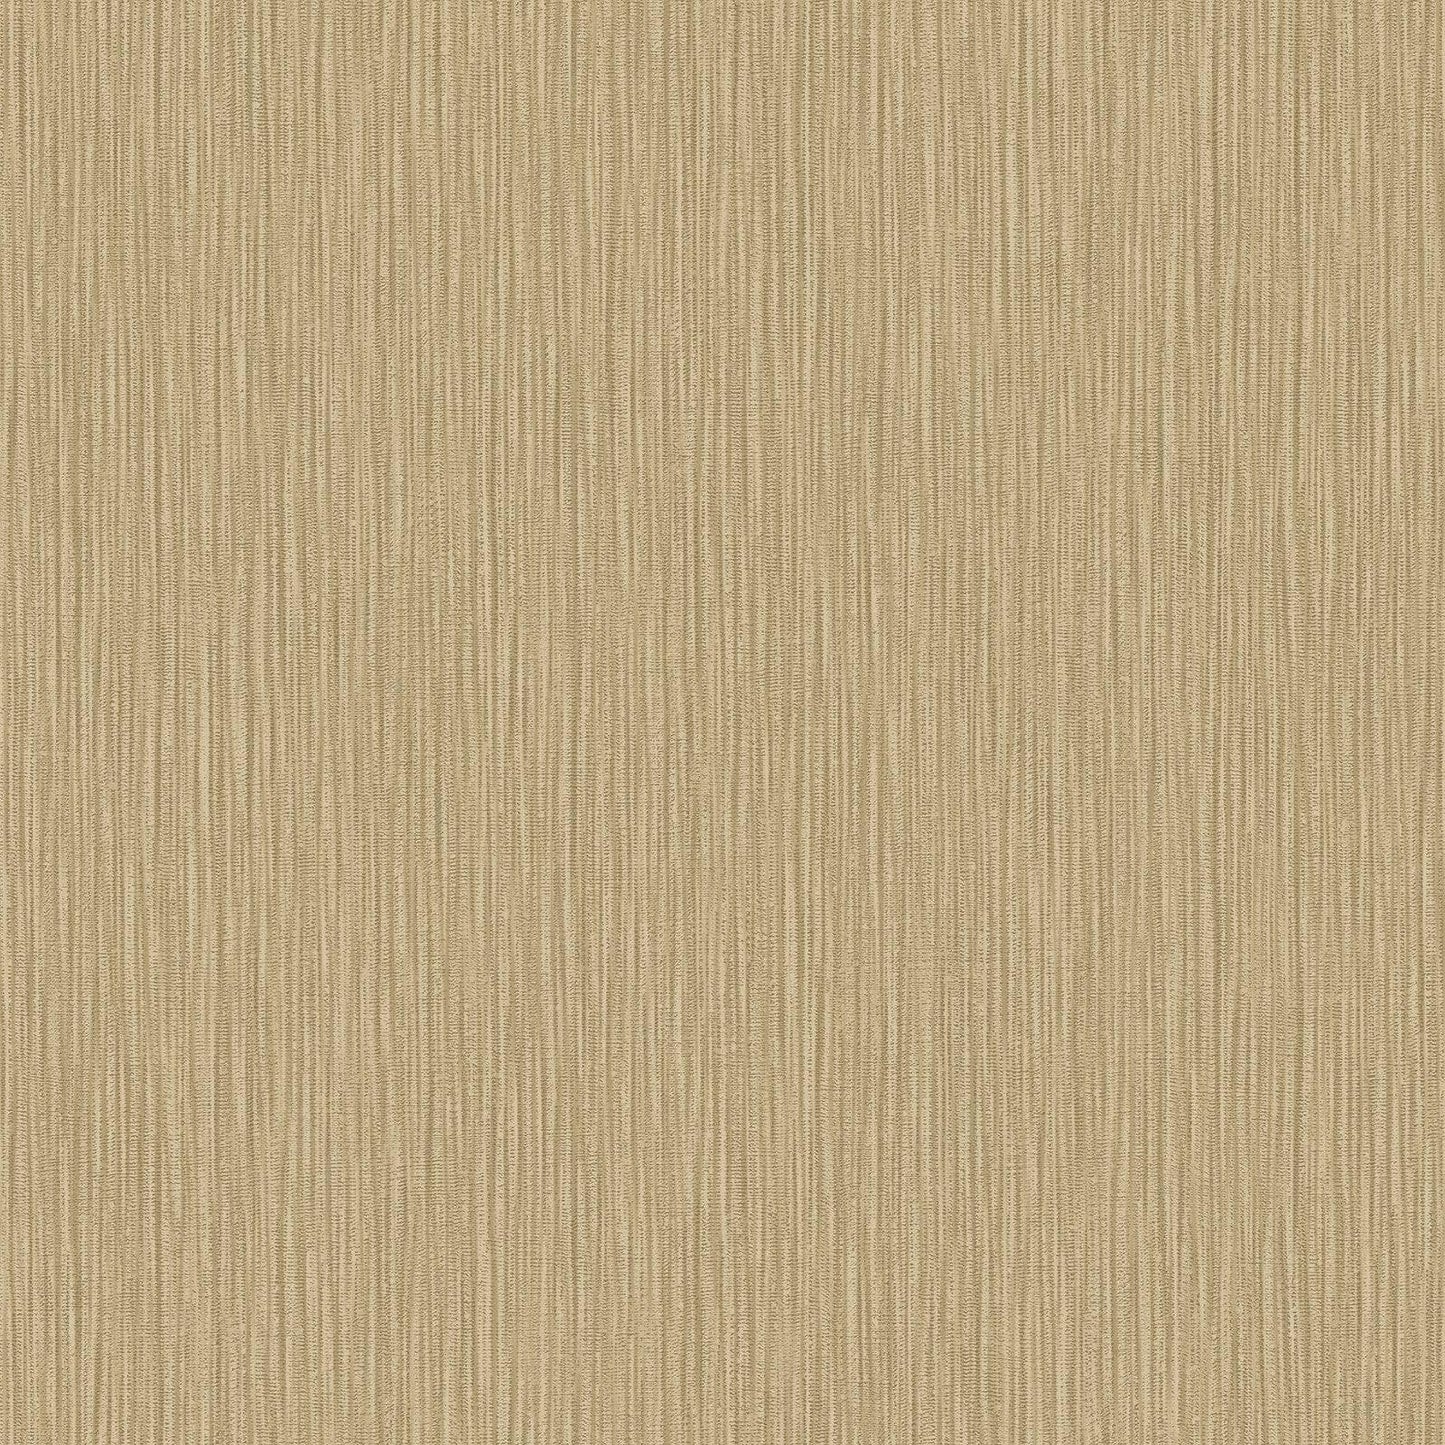 Wallpaper  -  Belgravia Amara Metallic Gold Text Wallpaper - 7394  -  60003857